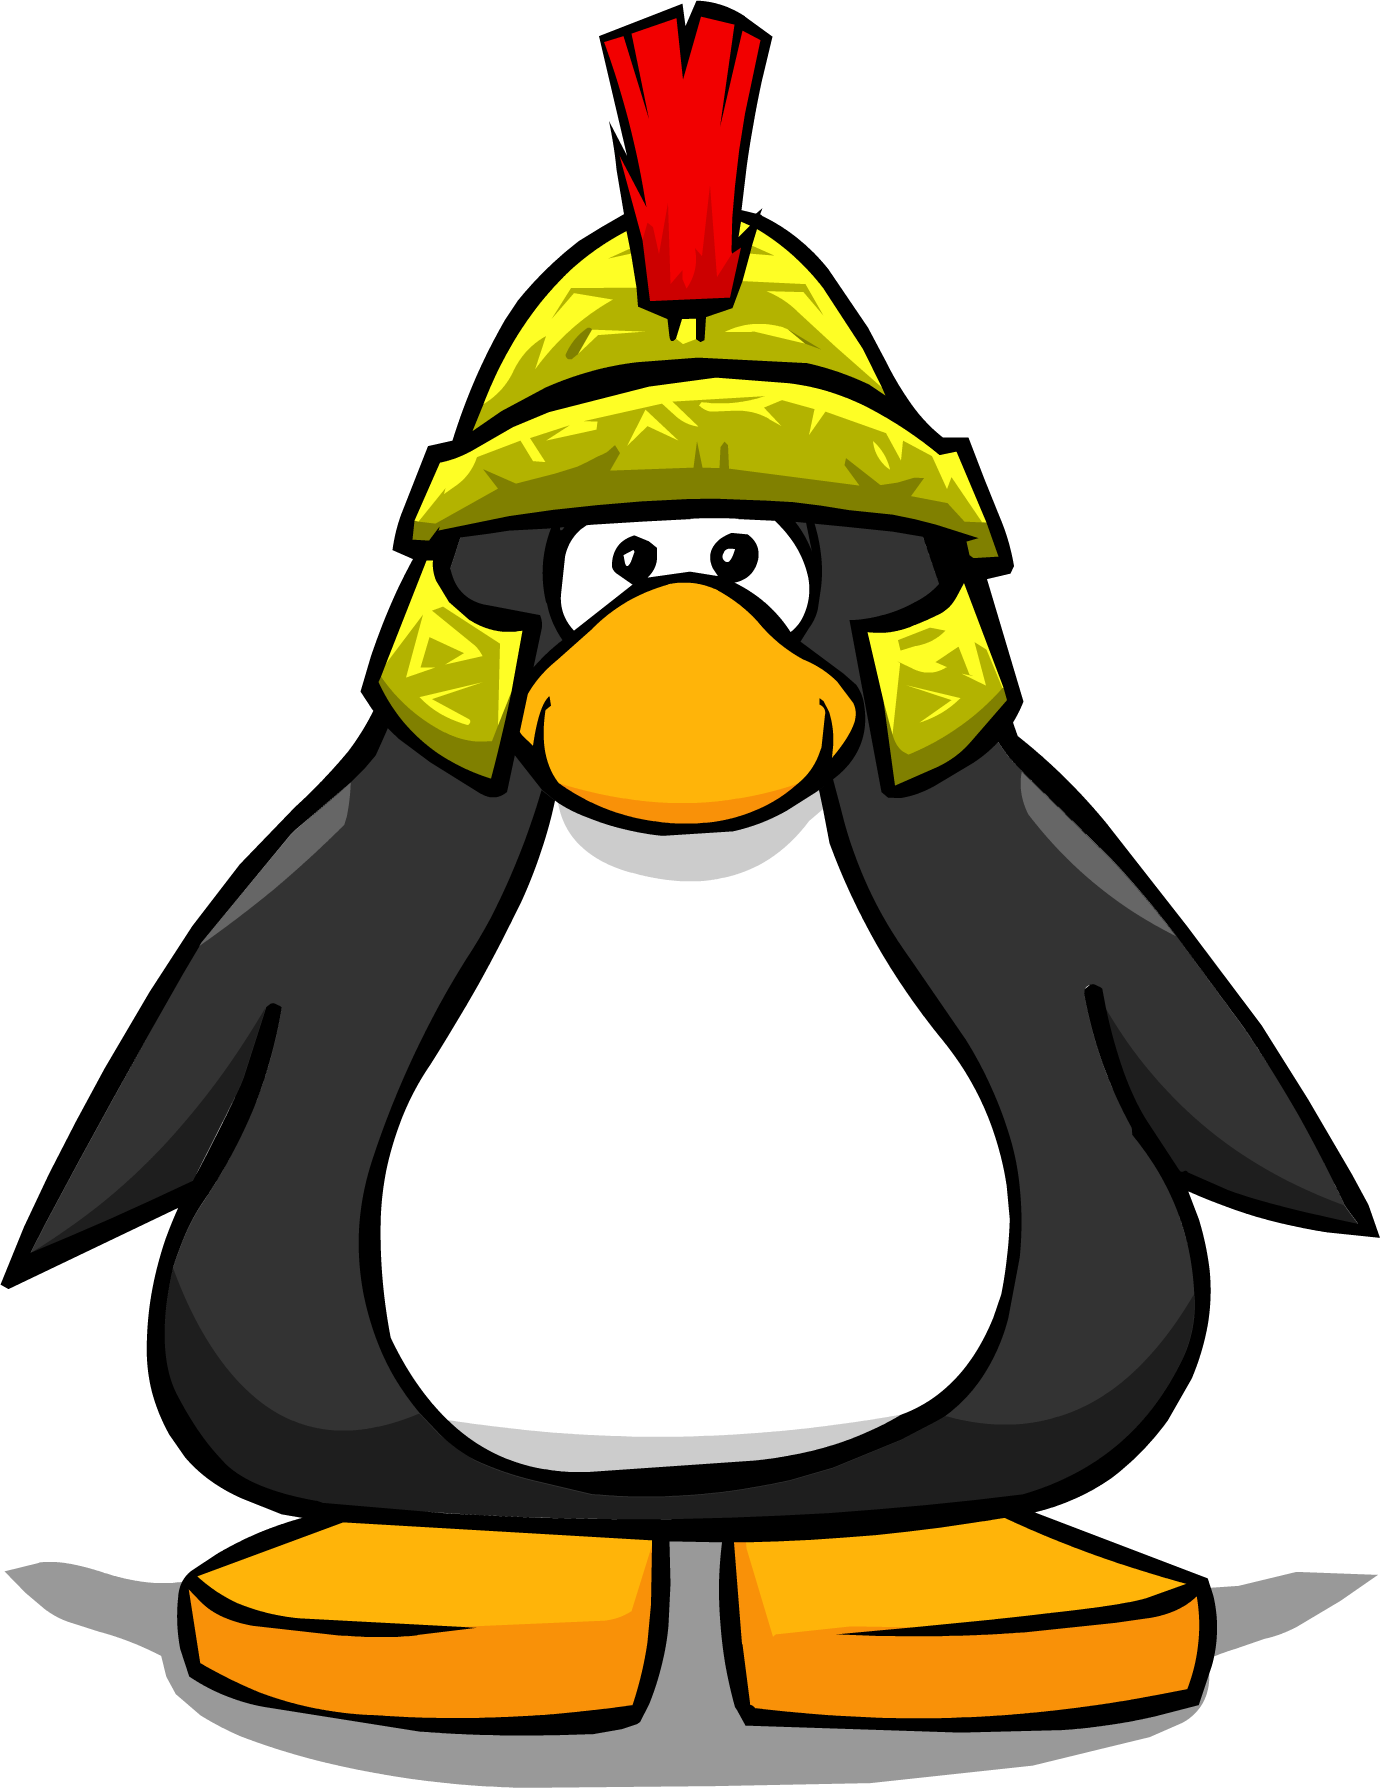 Roman Helmet - Penguin With Chef Hat (1380x1788)